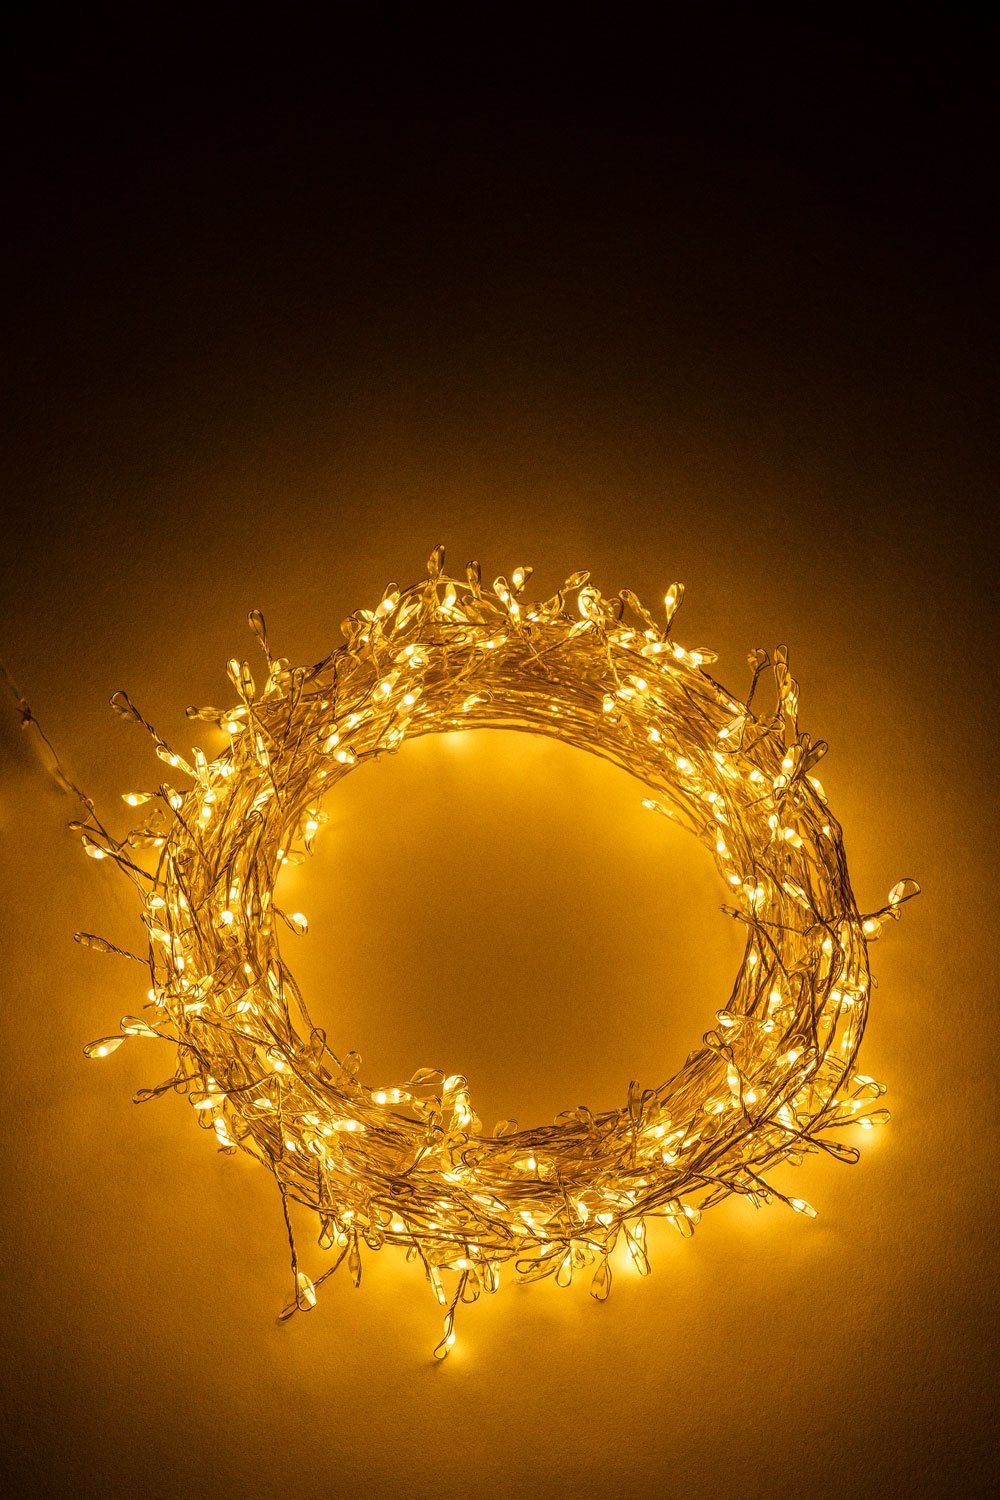 Ghirlanda decorativa LED (17 m) Jogas, immagine della galleria 1